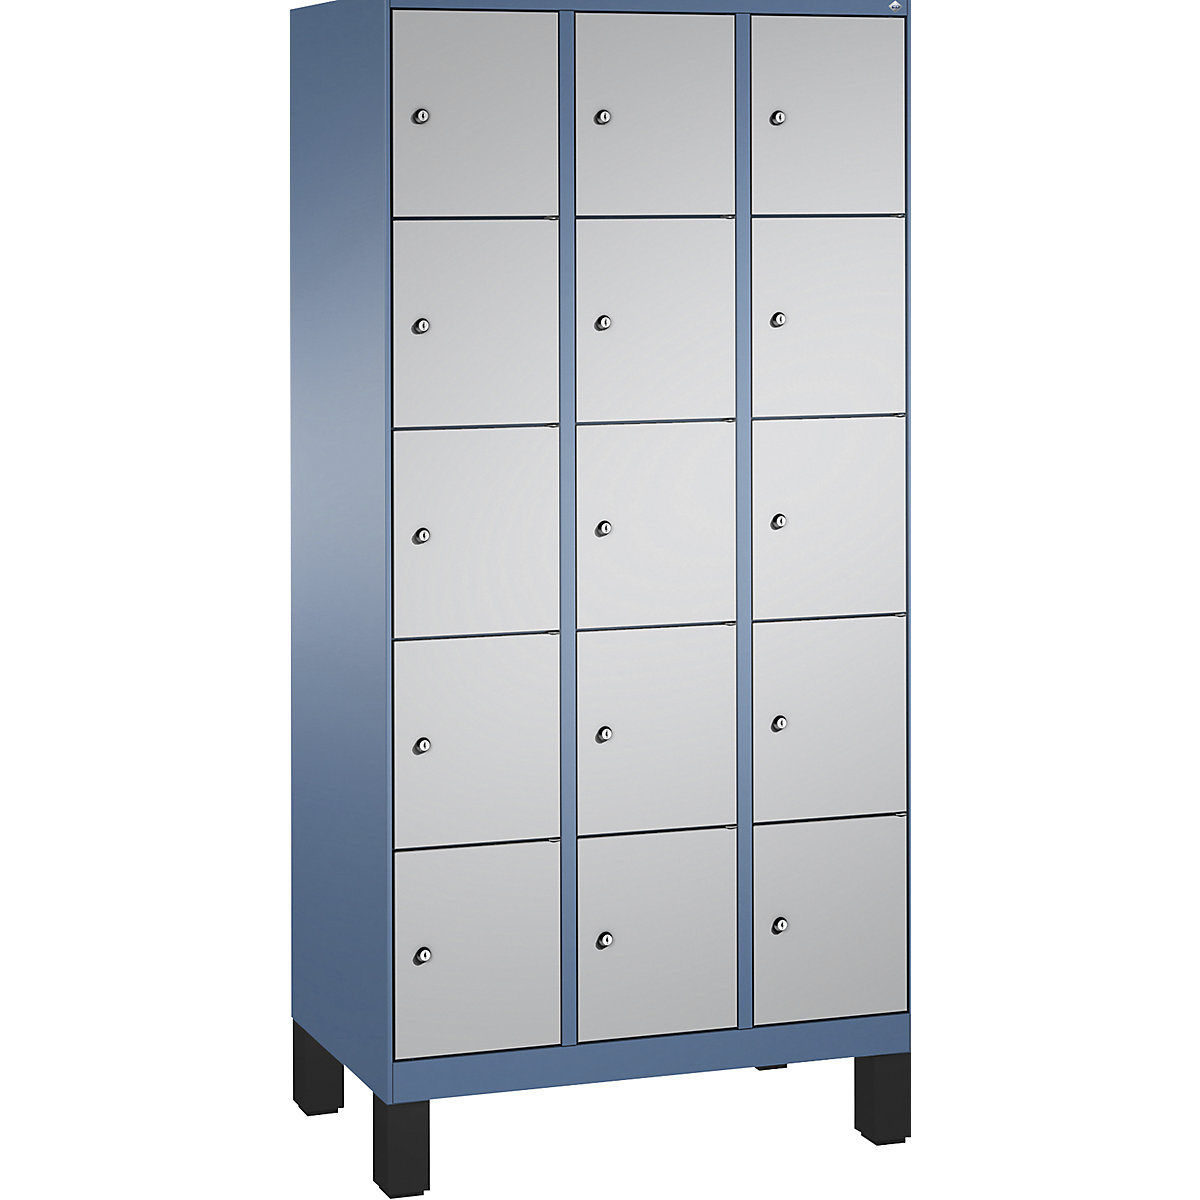 Armário de cacifos EVOLO, com pés – C+P, 3 compartimentos, 5 cacifos cada, largura do compartimento 300 mm, azul distante / cinza alumínio-13